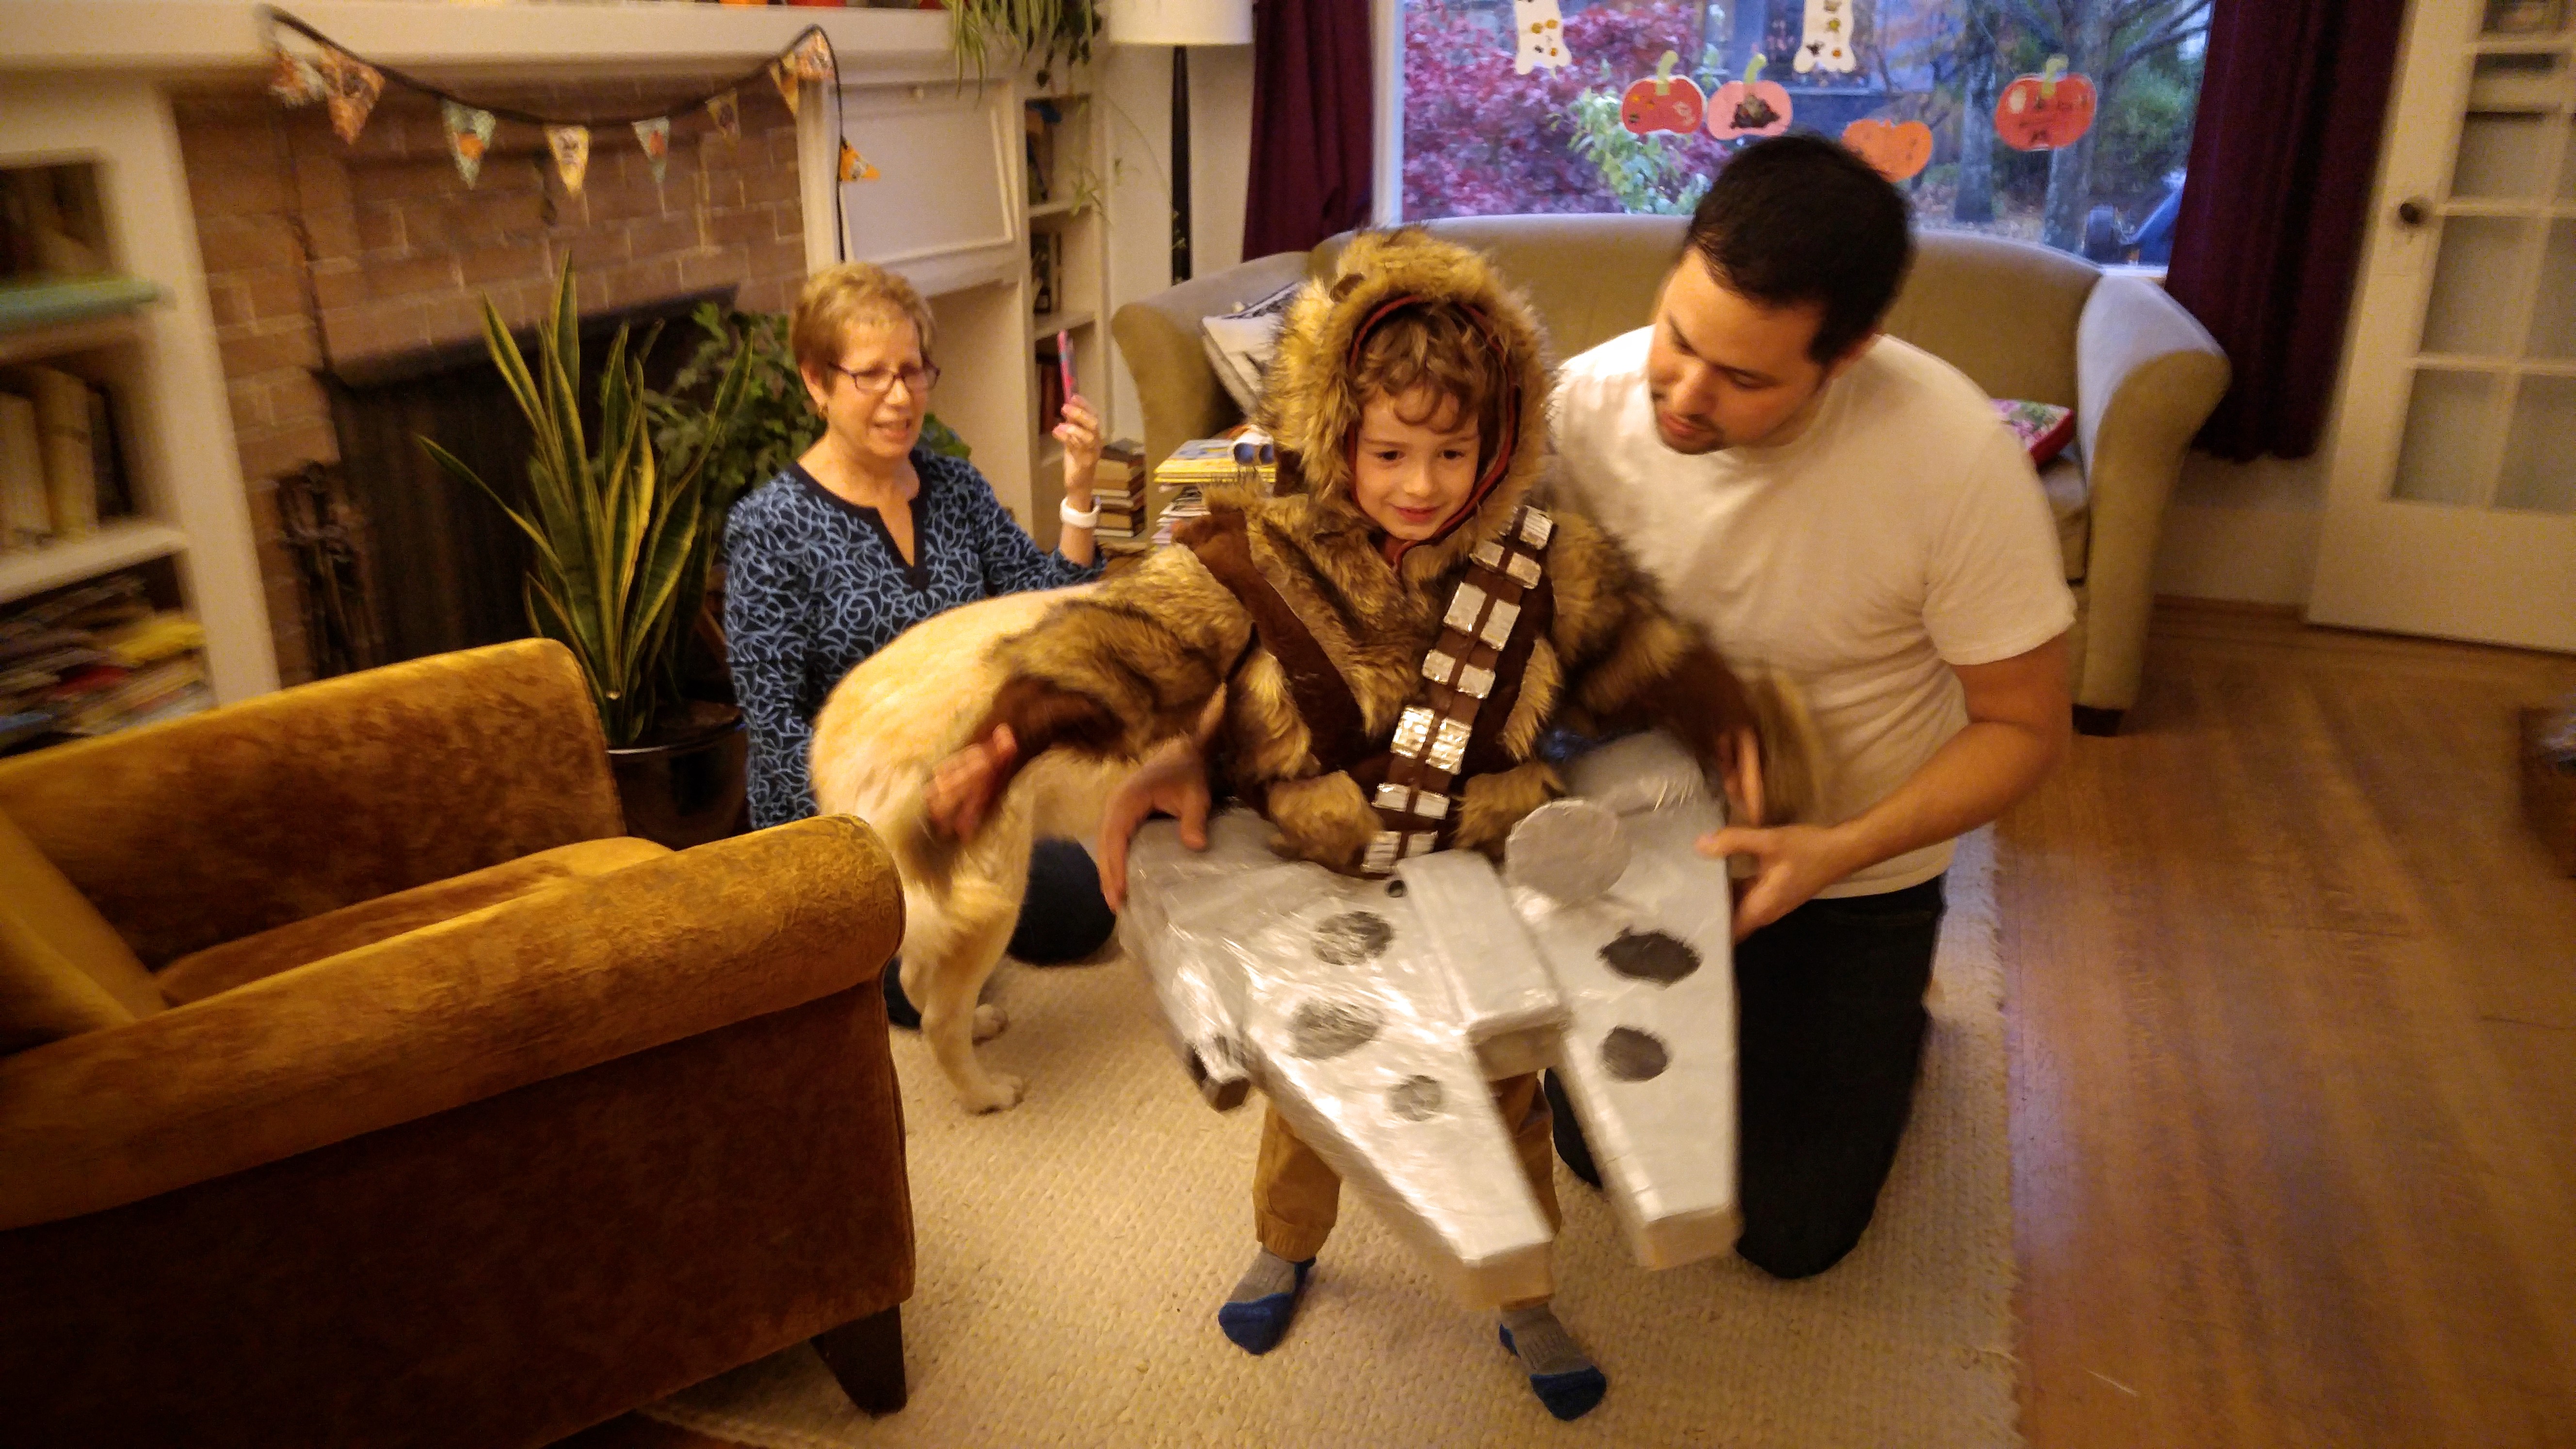 DIY Chewbacca Millennium Falcon costume